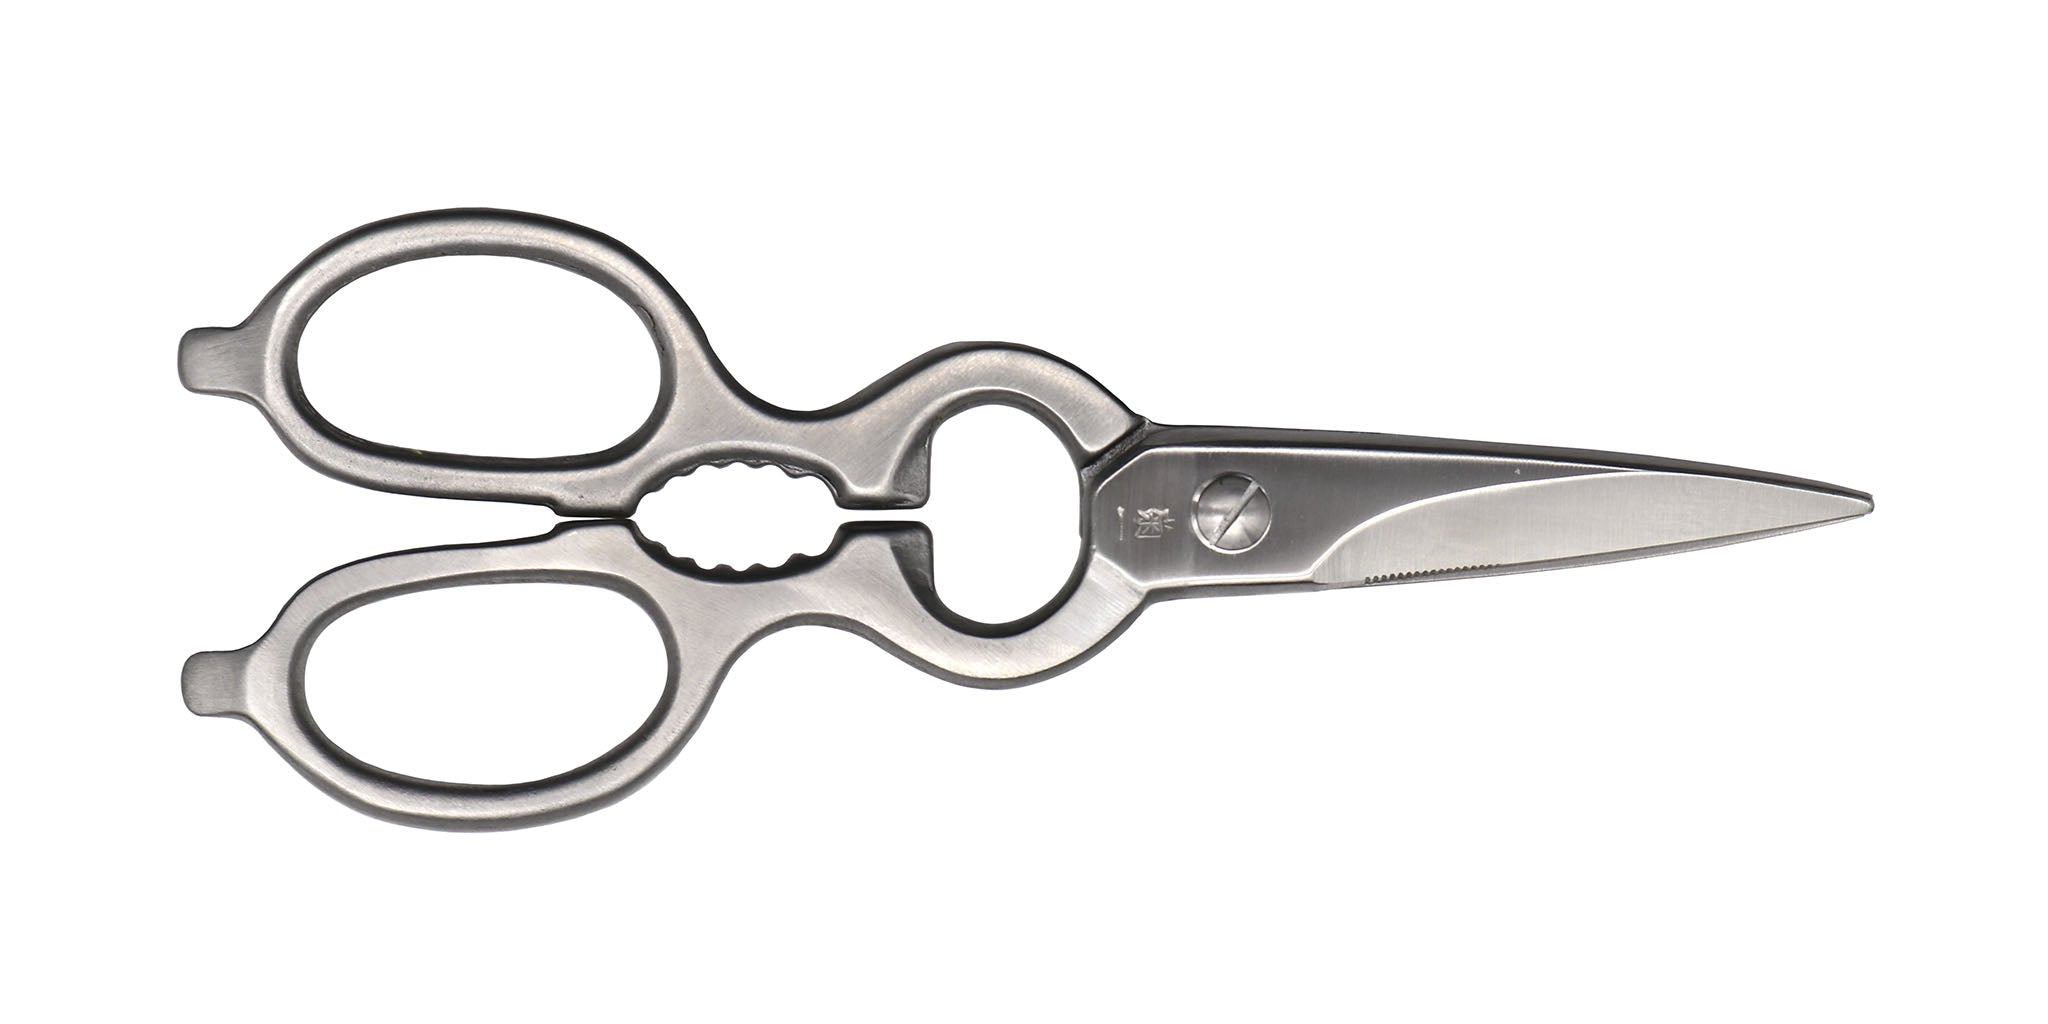 Buy ZWILLING Shears & Scissors Multi-purpose shears